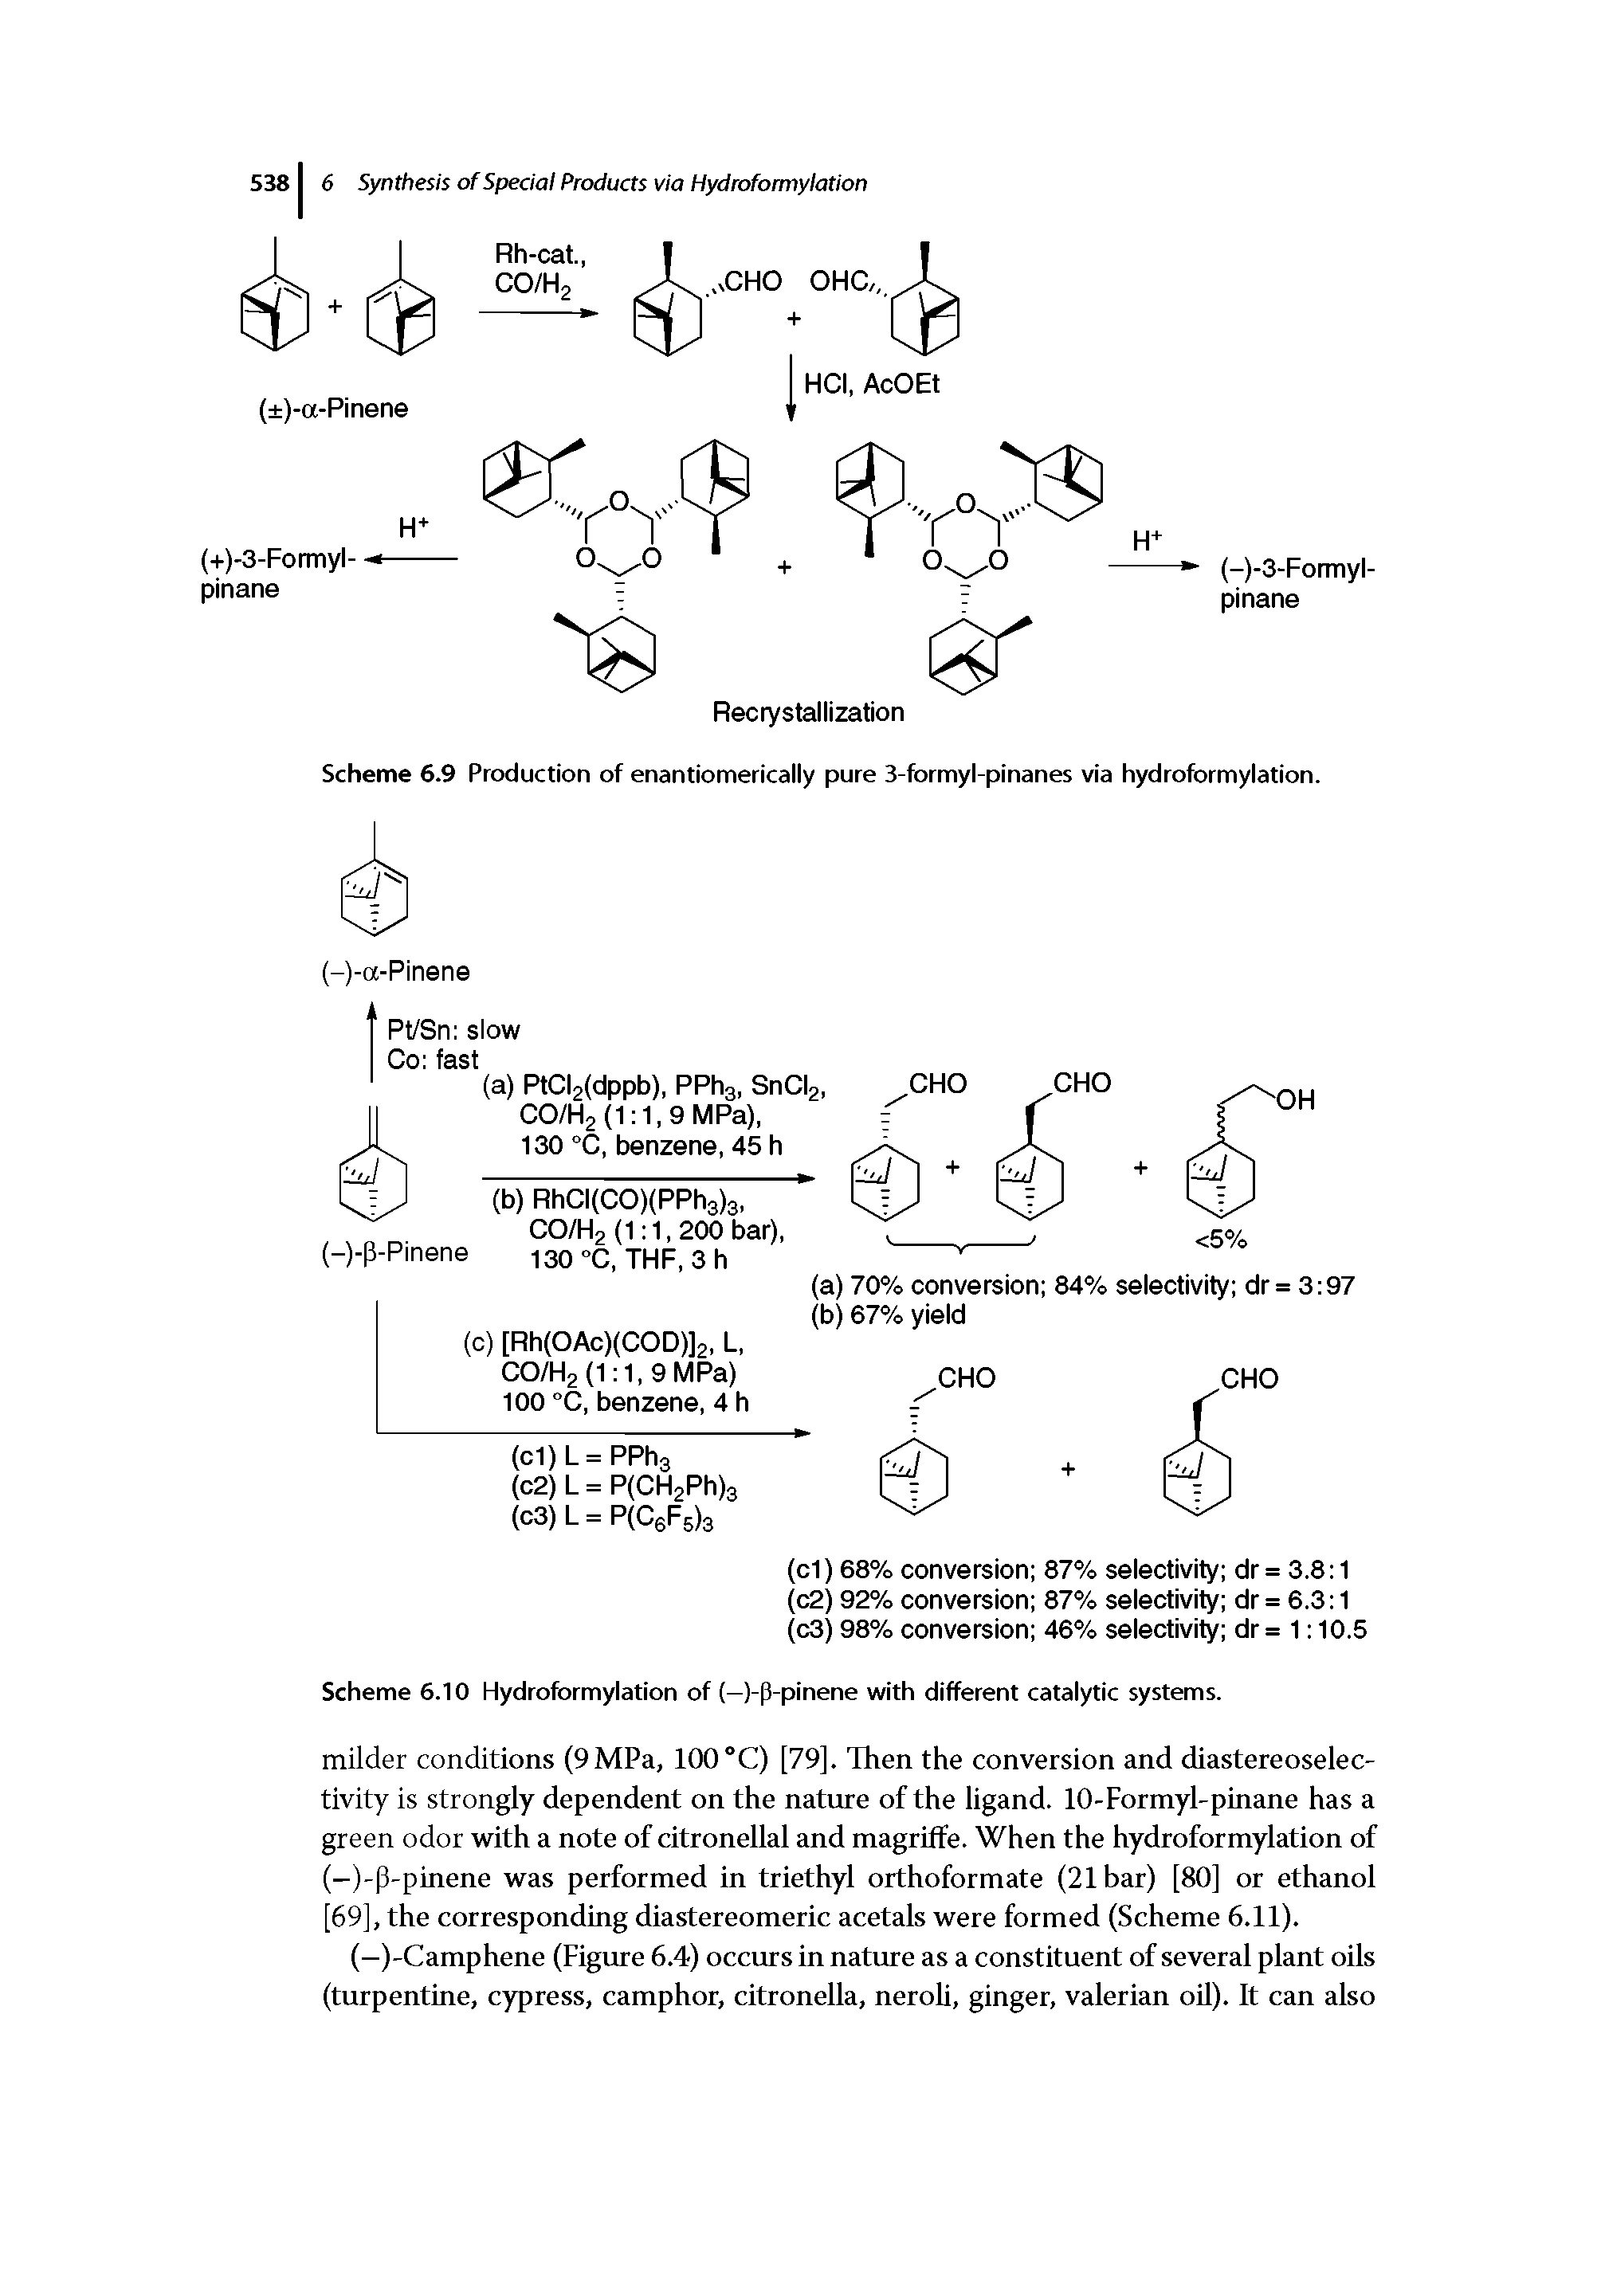 Scheme 6.9 Production of enantiomerically pure 3-formyl-pinanes via hydroformylation.